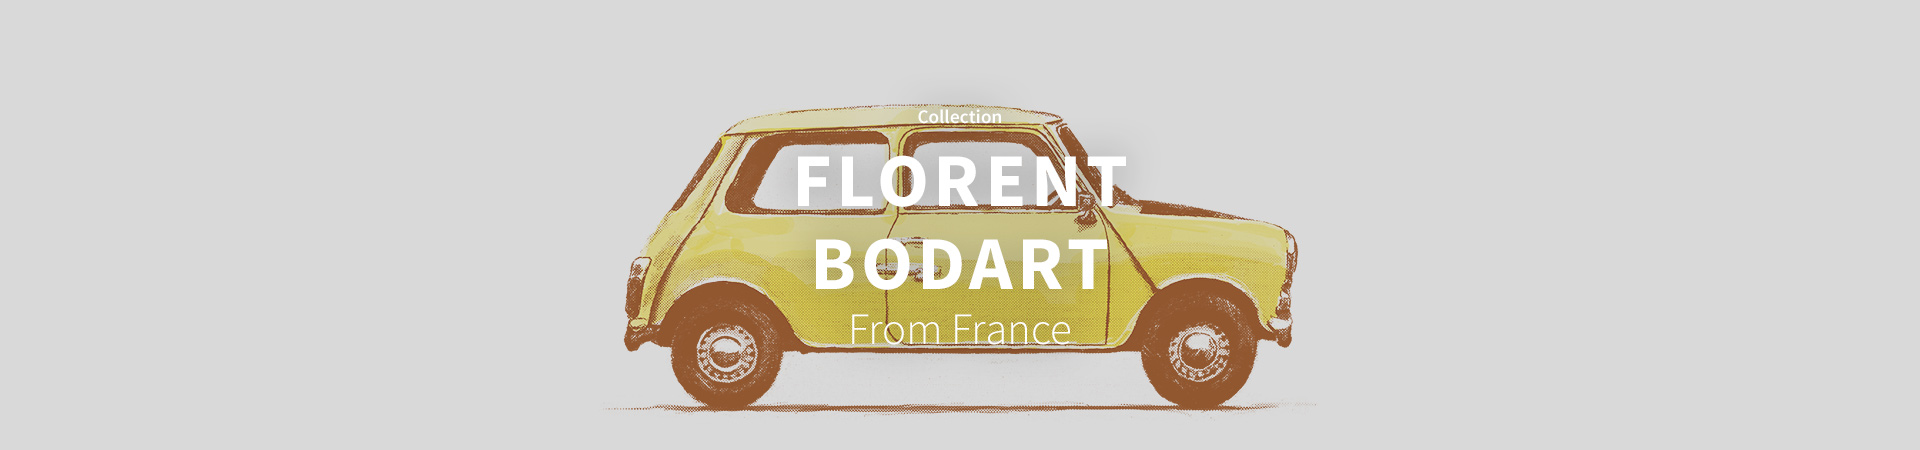 Florent Bodart